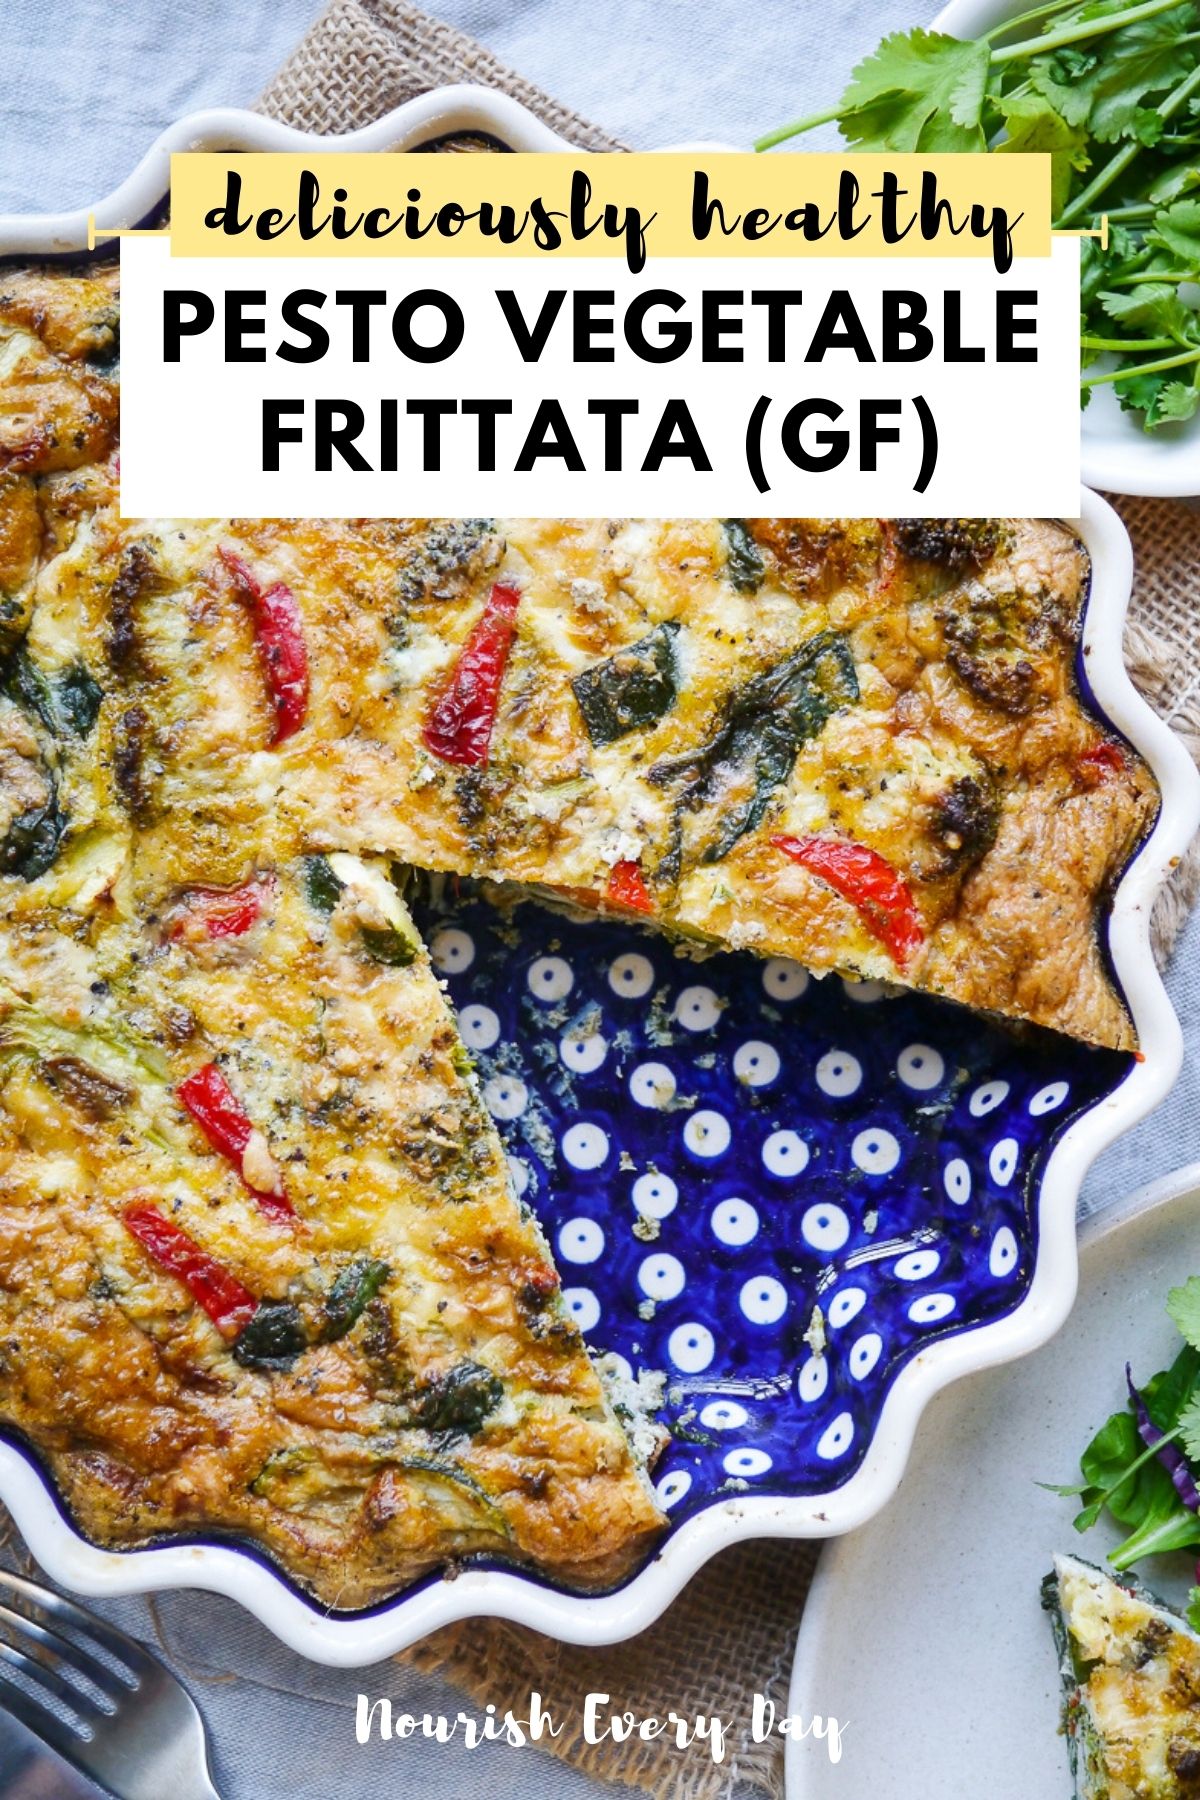 Pesto Vegetable Frittata Recipe Pin by Nourish Every Day